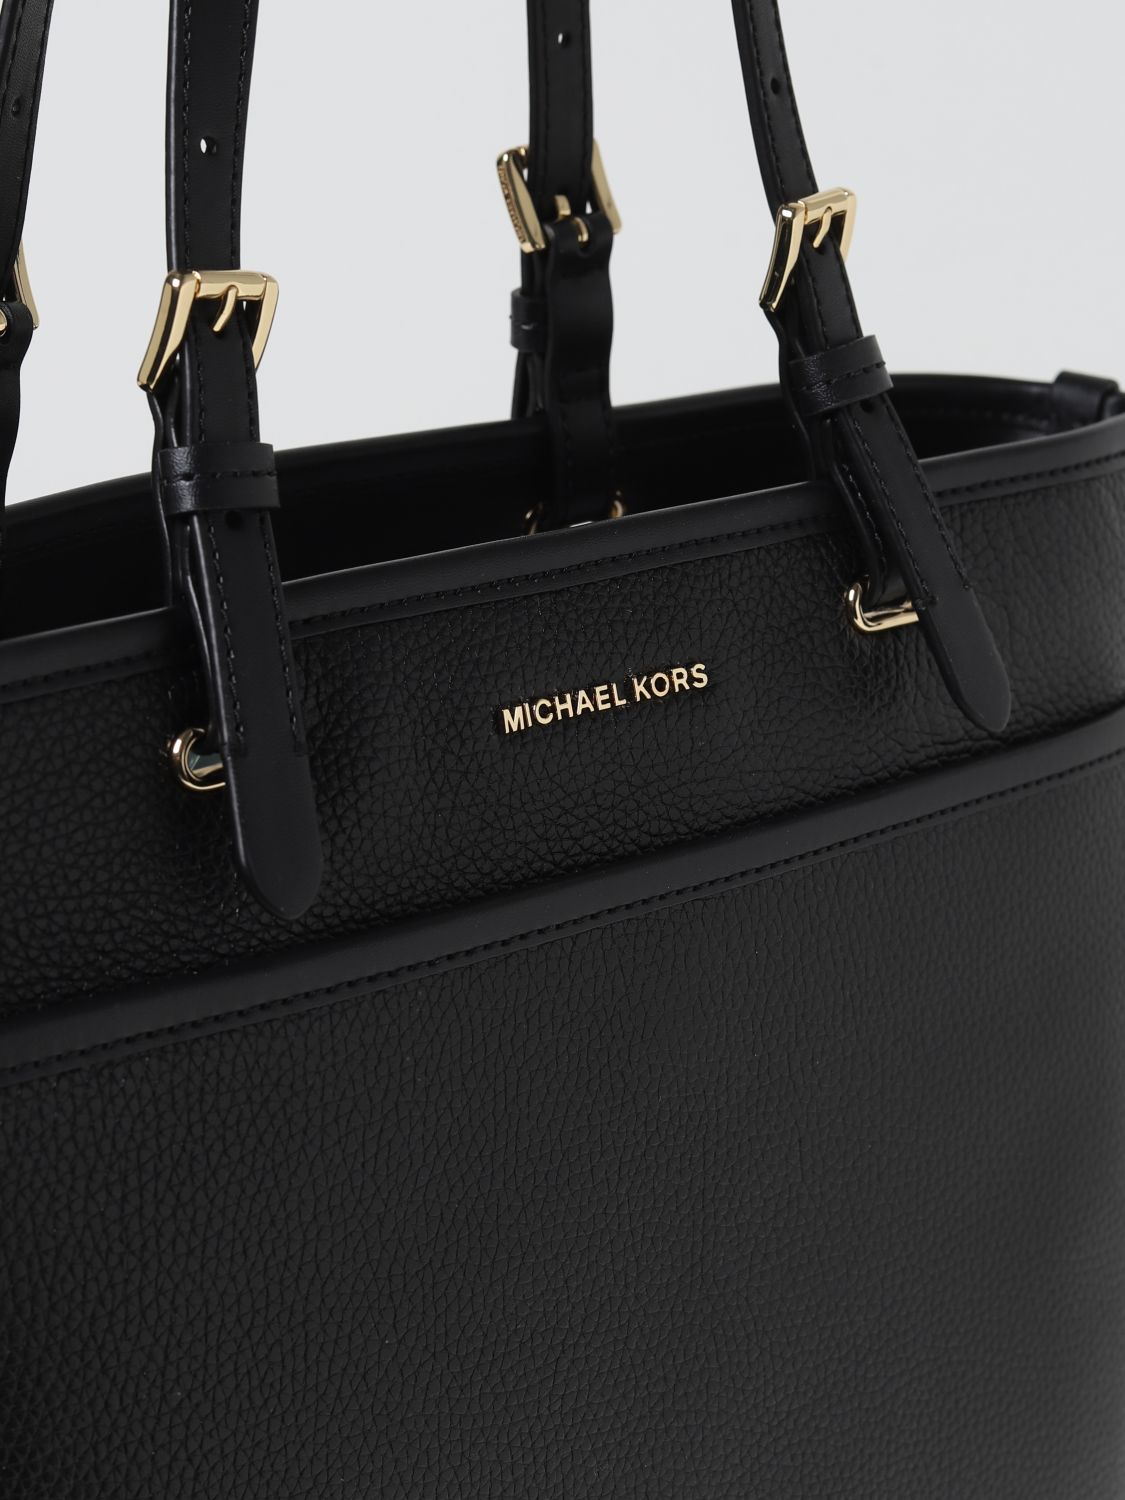 MICHAEL KORS: Michael leather tote bag - Black  Michael Kors tote bags  30S2GCDT3L online at